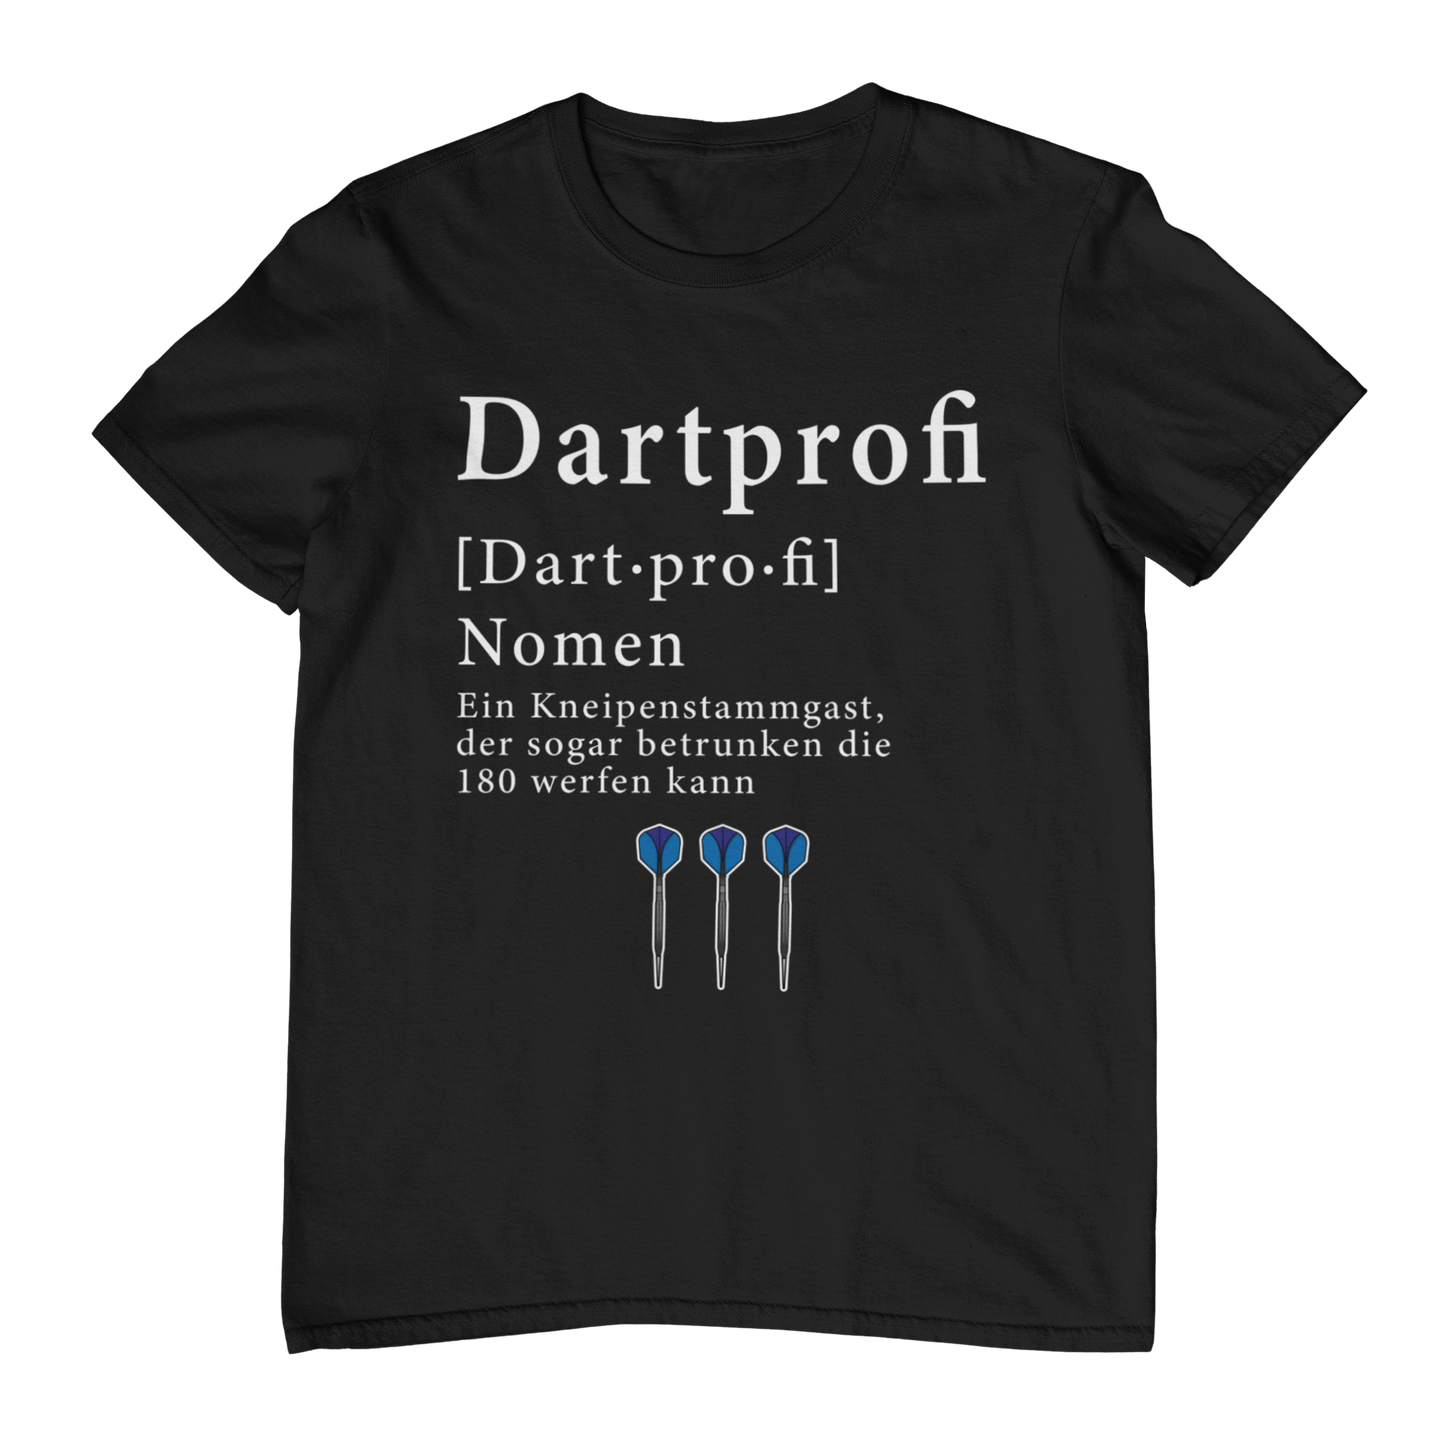 Dartprofi - Shirt